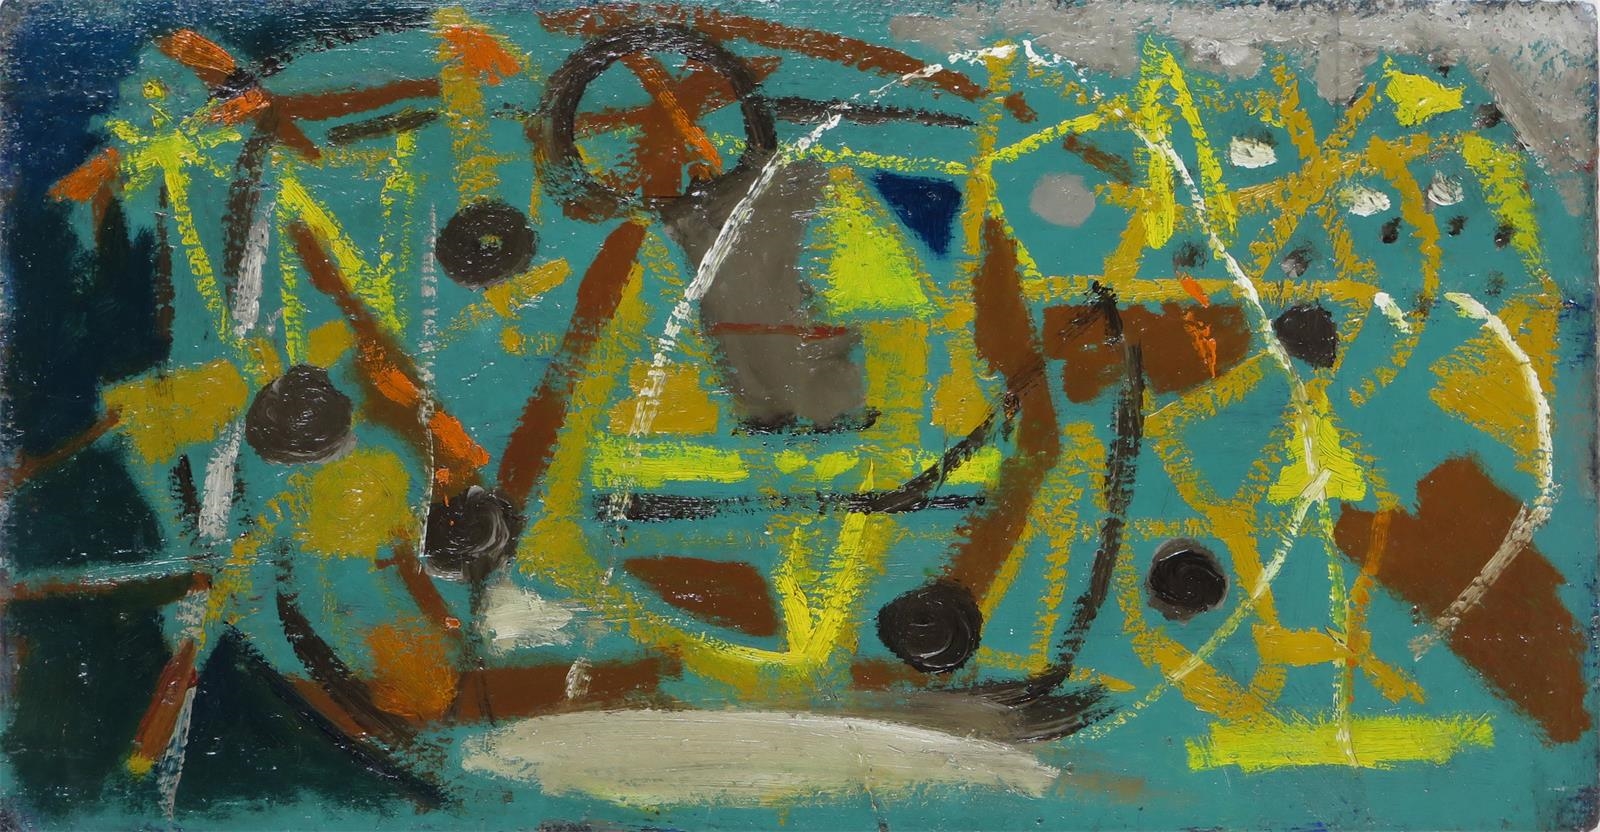 Abstract composition by Roger Hilton, circa 1951